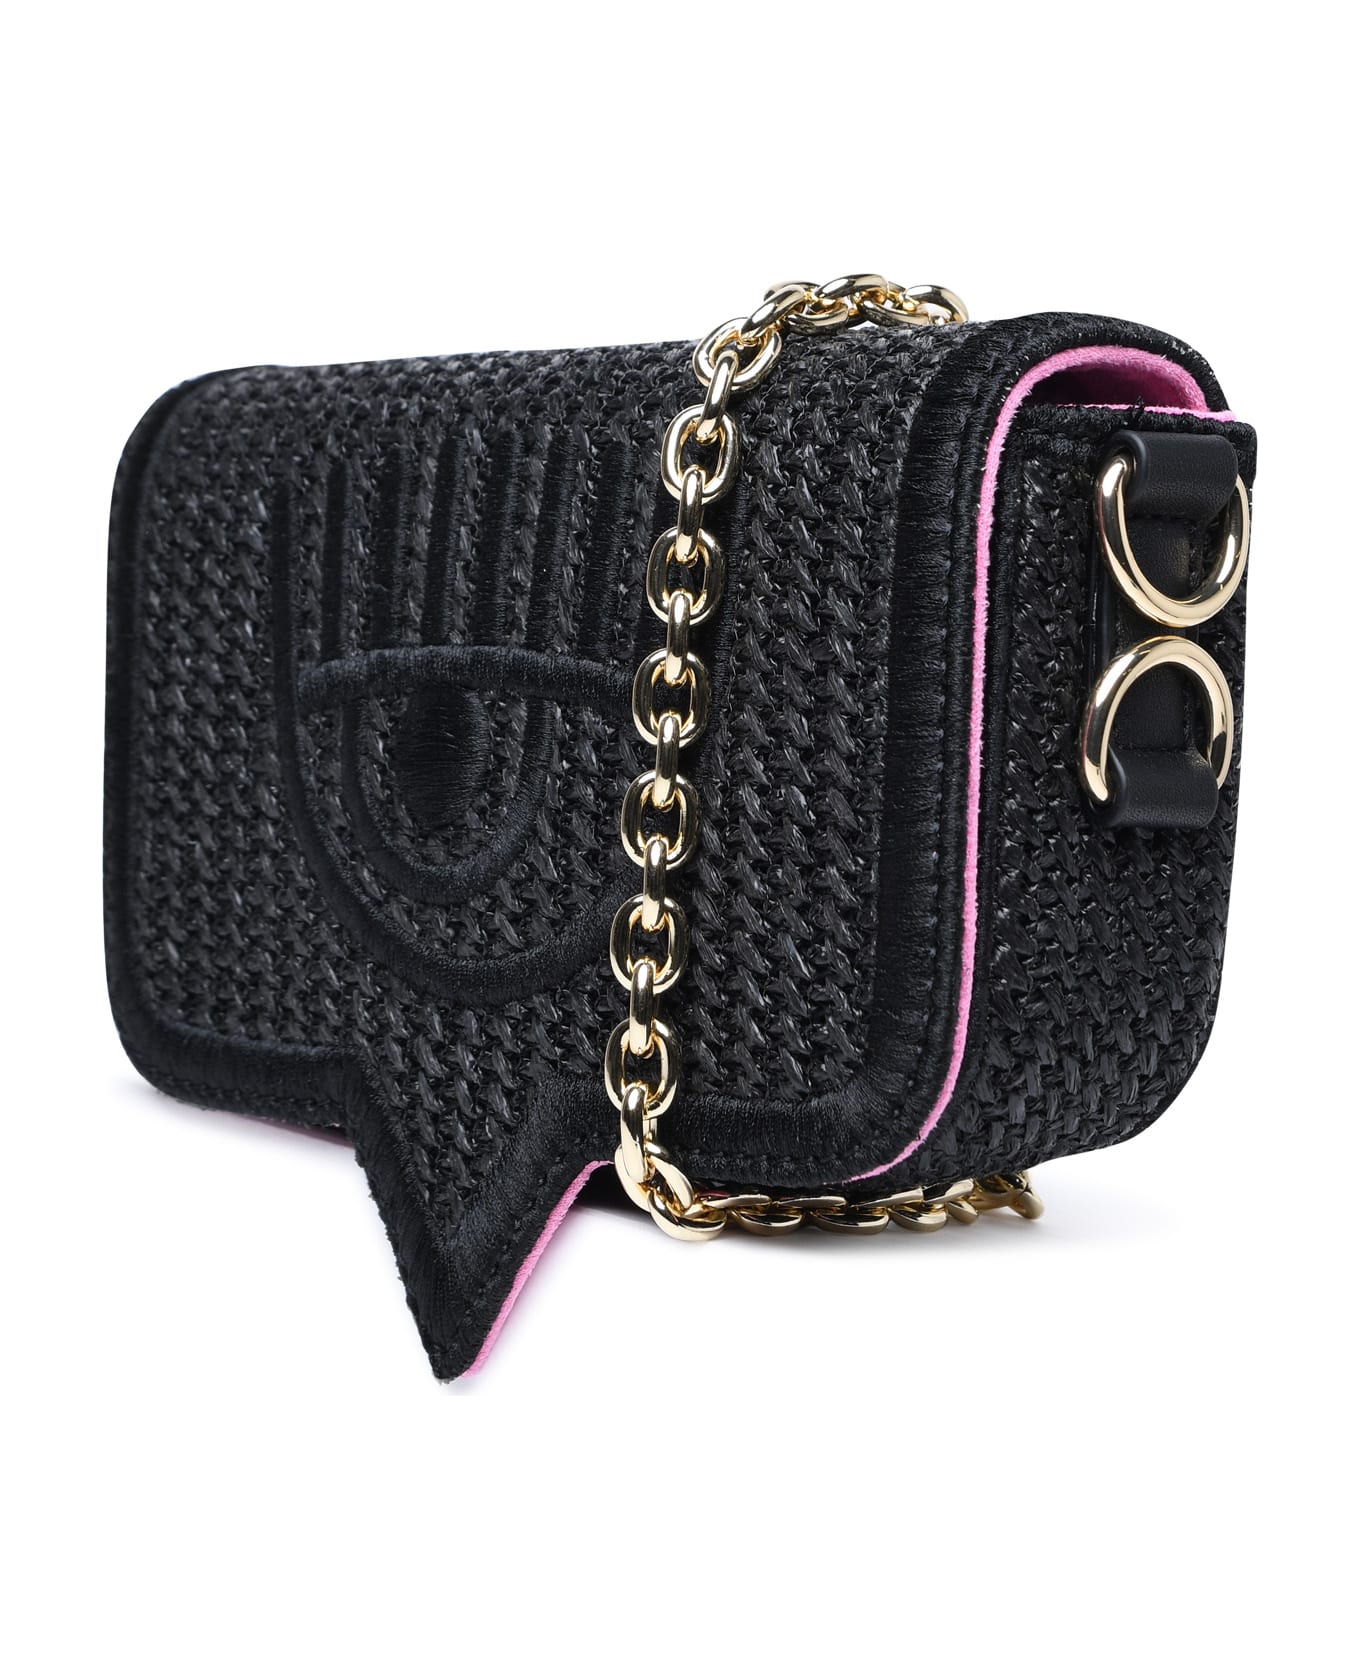 Chiara Ferragni Eyelike Raffia Embroidered Shoulder Bag - Black